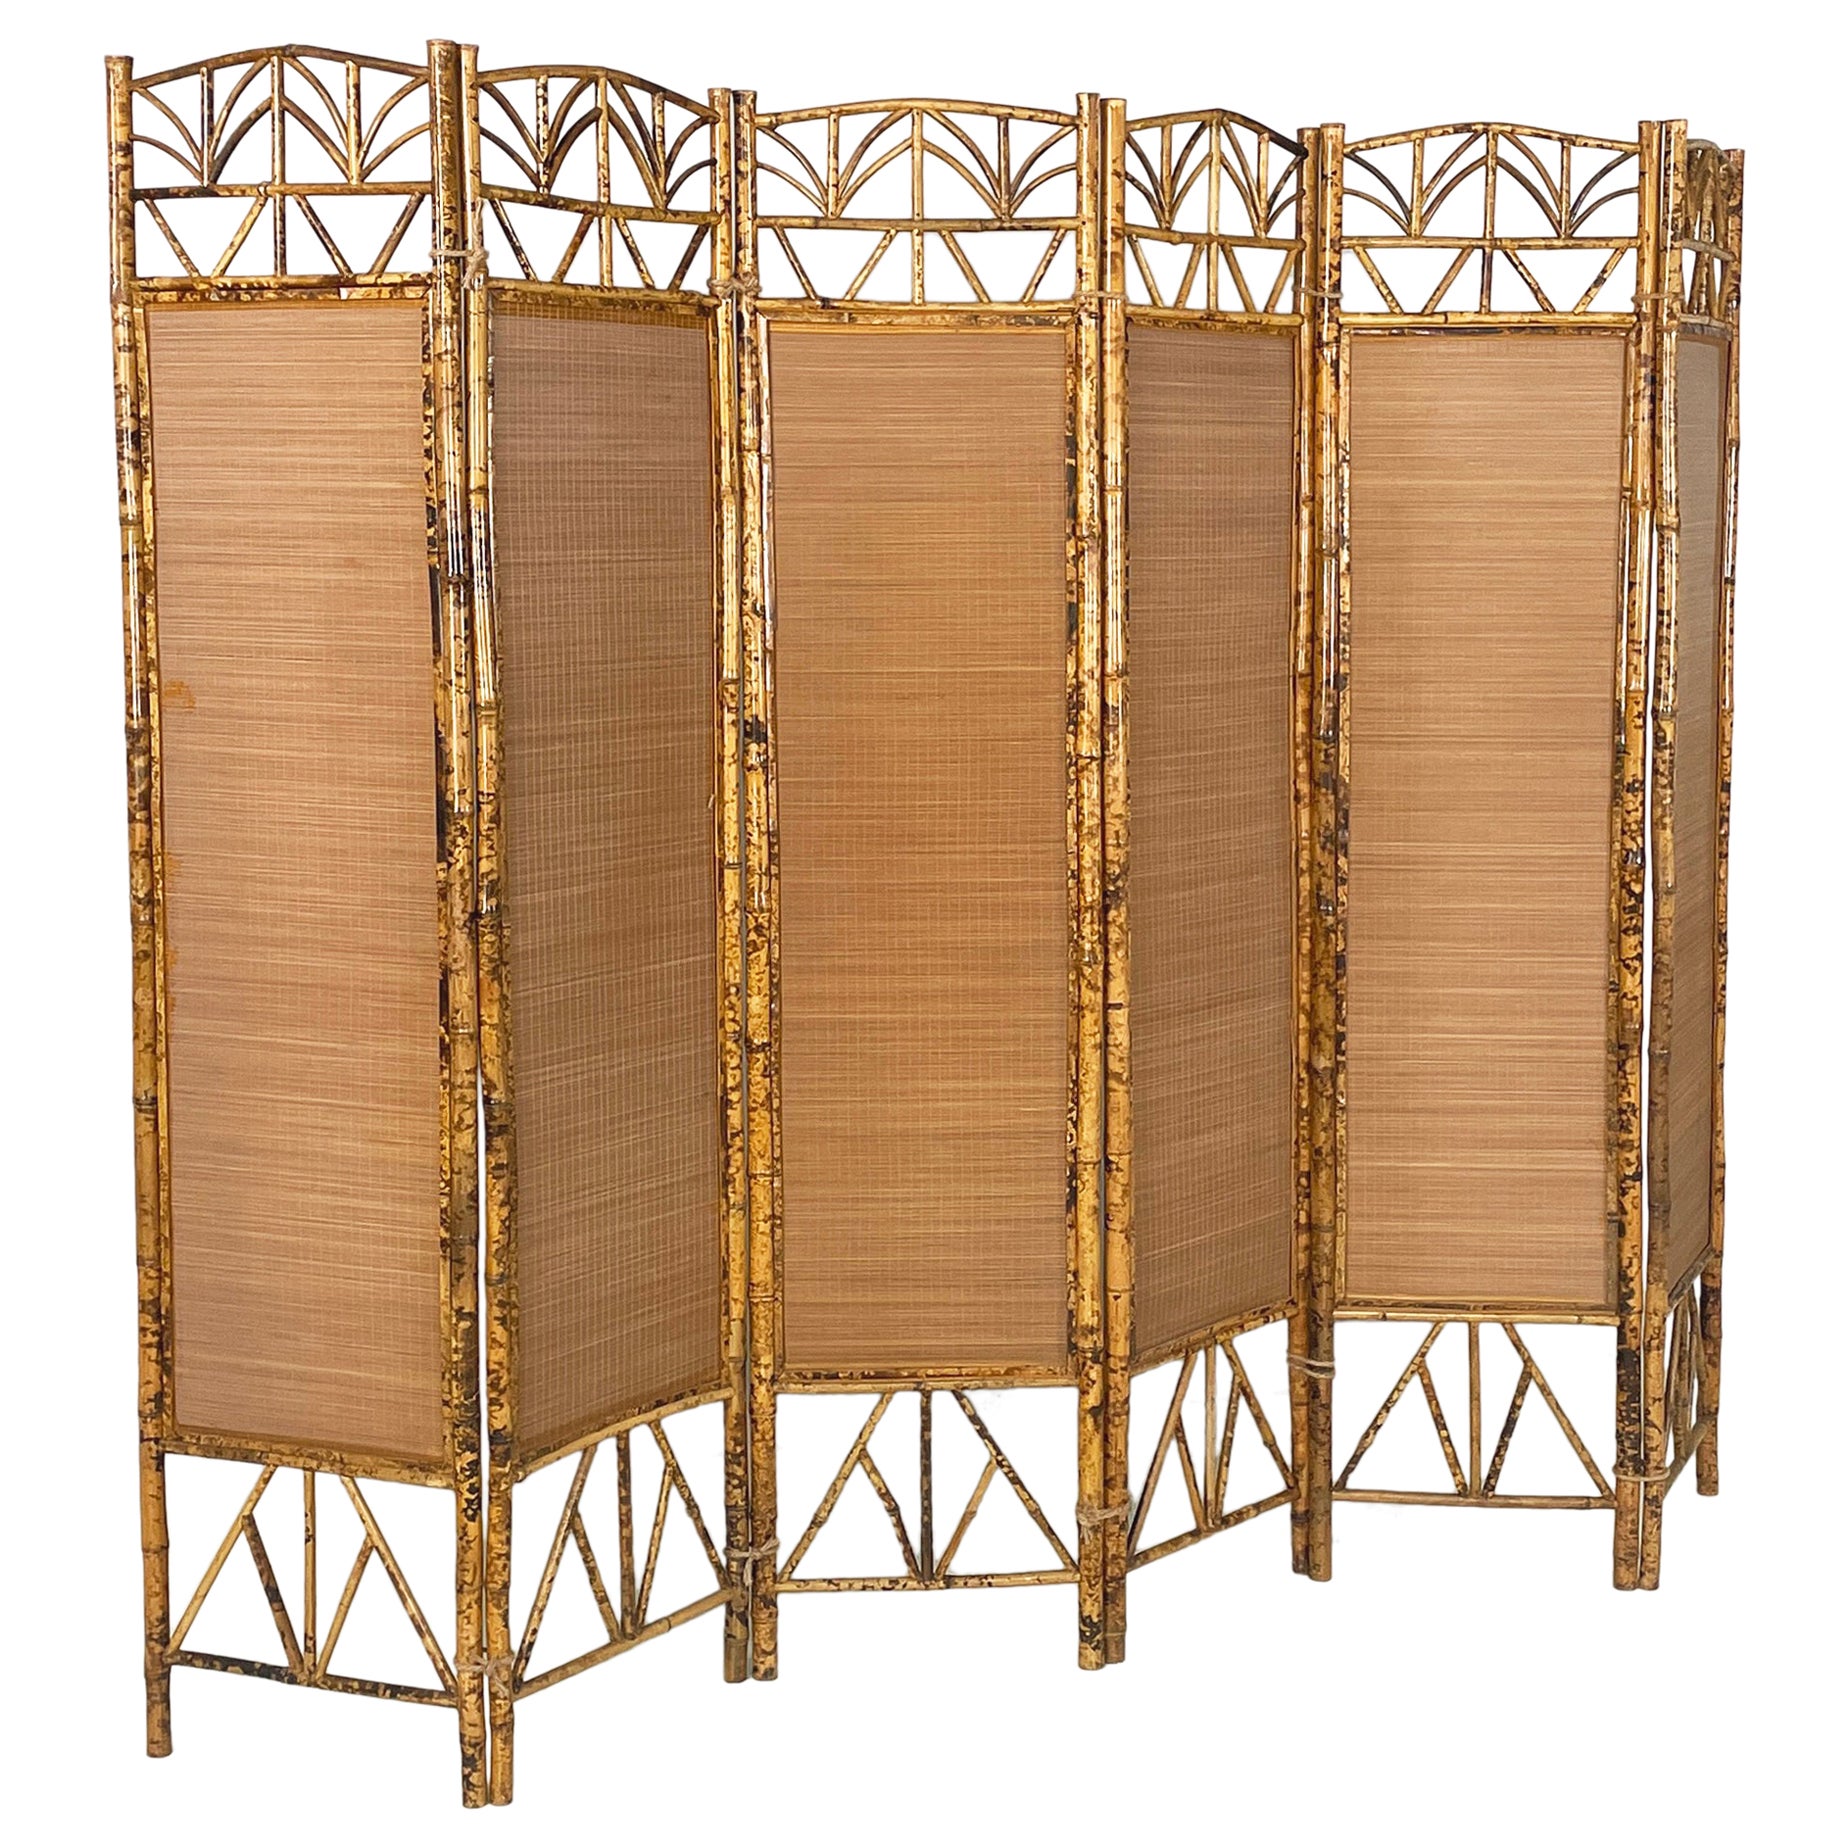 Italian mid-century modern Screen in bamboo and rattan, 1950s